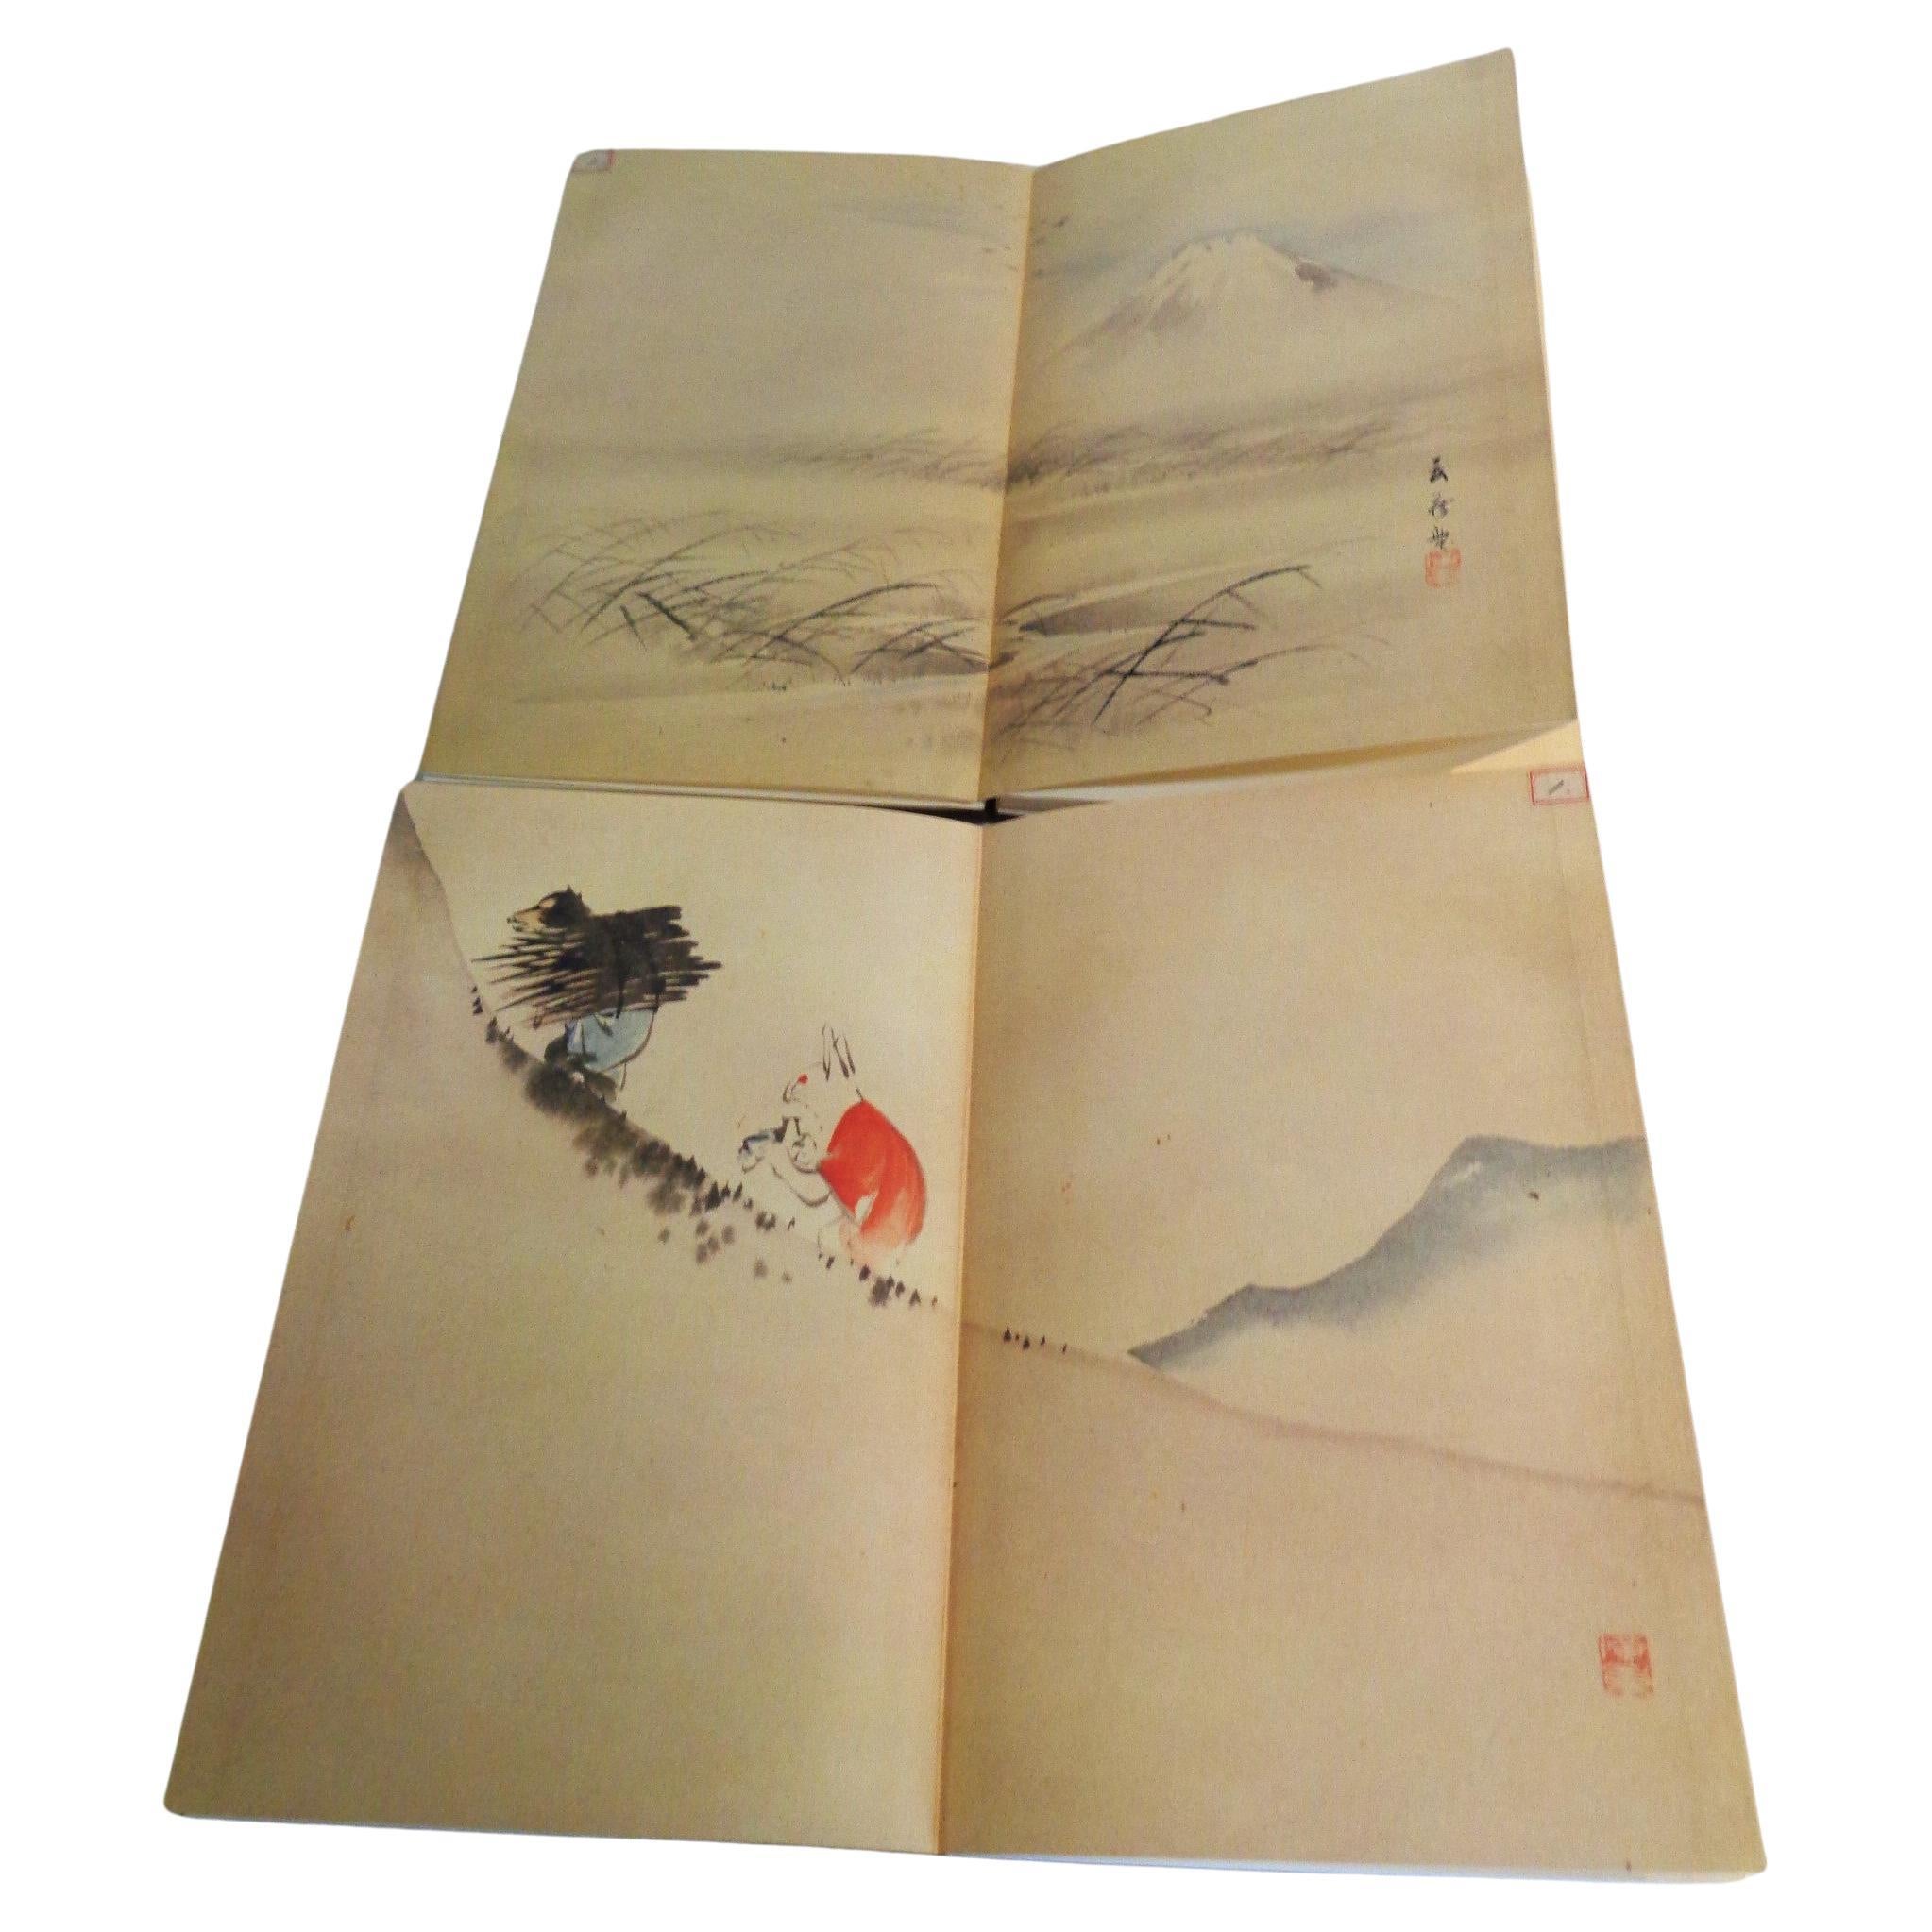 The Sketchbooks of Hiroshige, 1984 George Braziller - 1st Edition 1